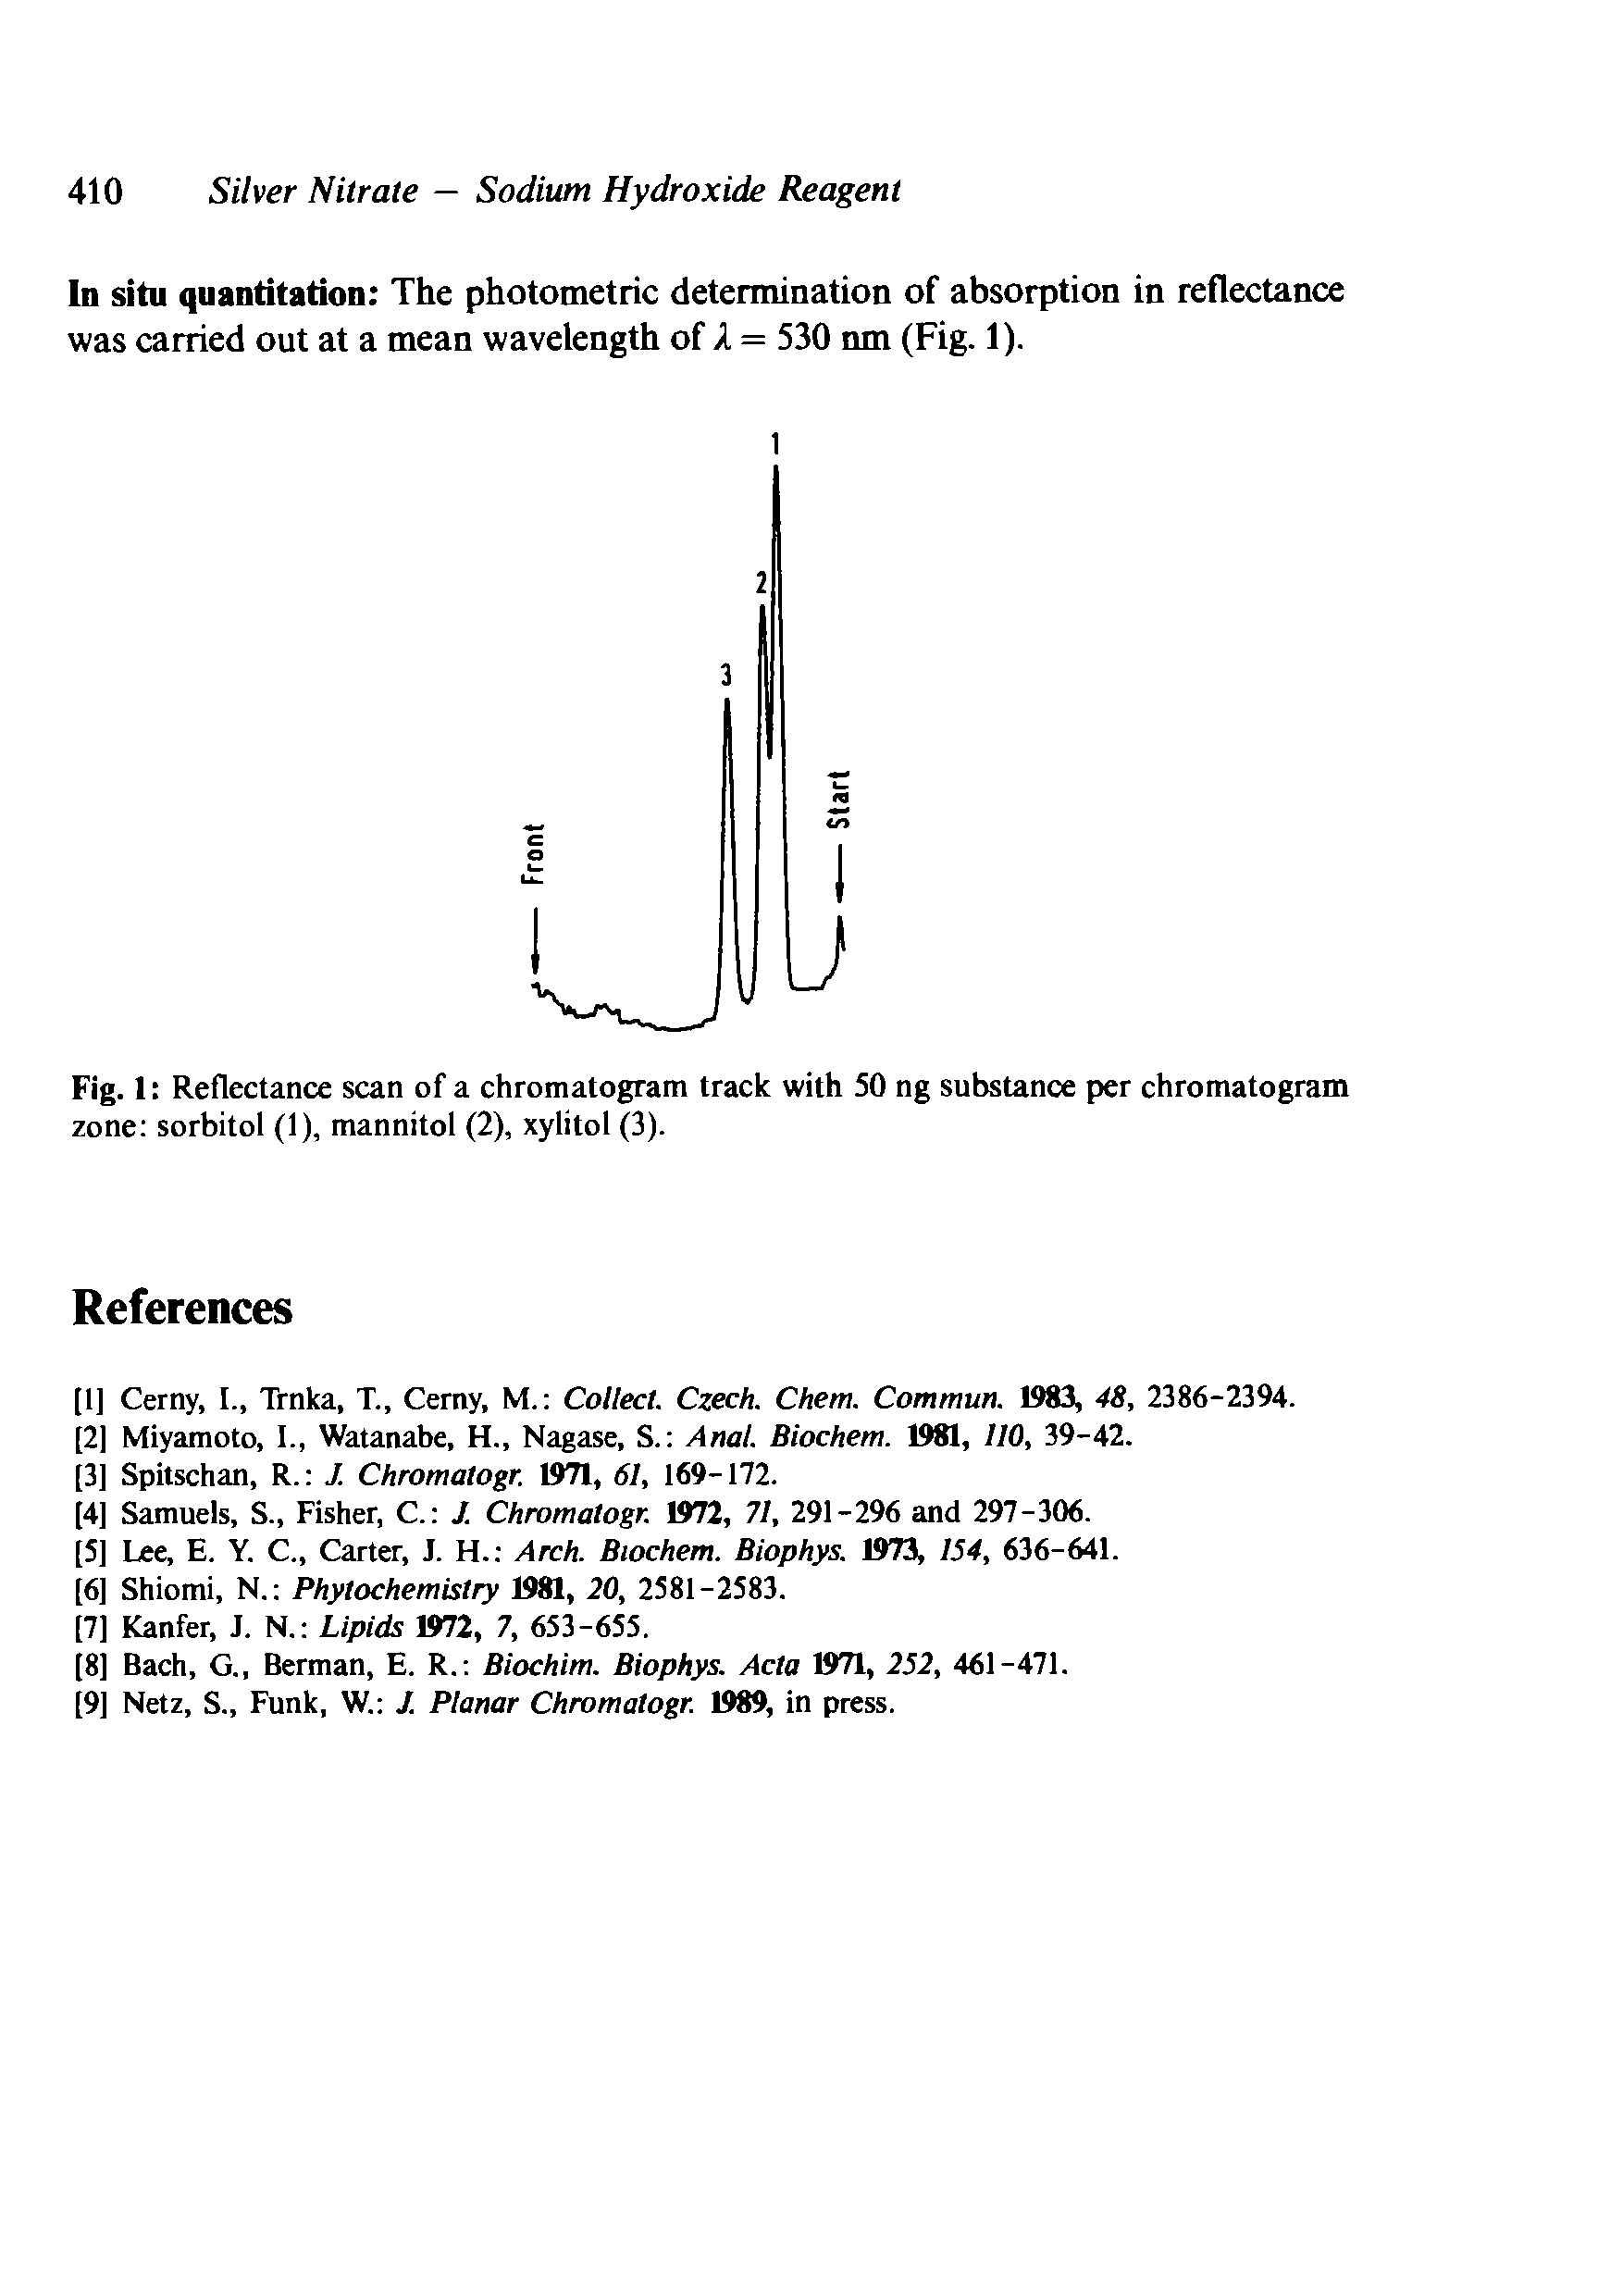 Fig. 1 Reflectance scan of a chromatogram track with 50 ng substance per chromatogram zone sorbitol (1), mannitol (2), xylitol (3).